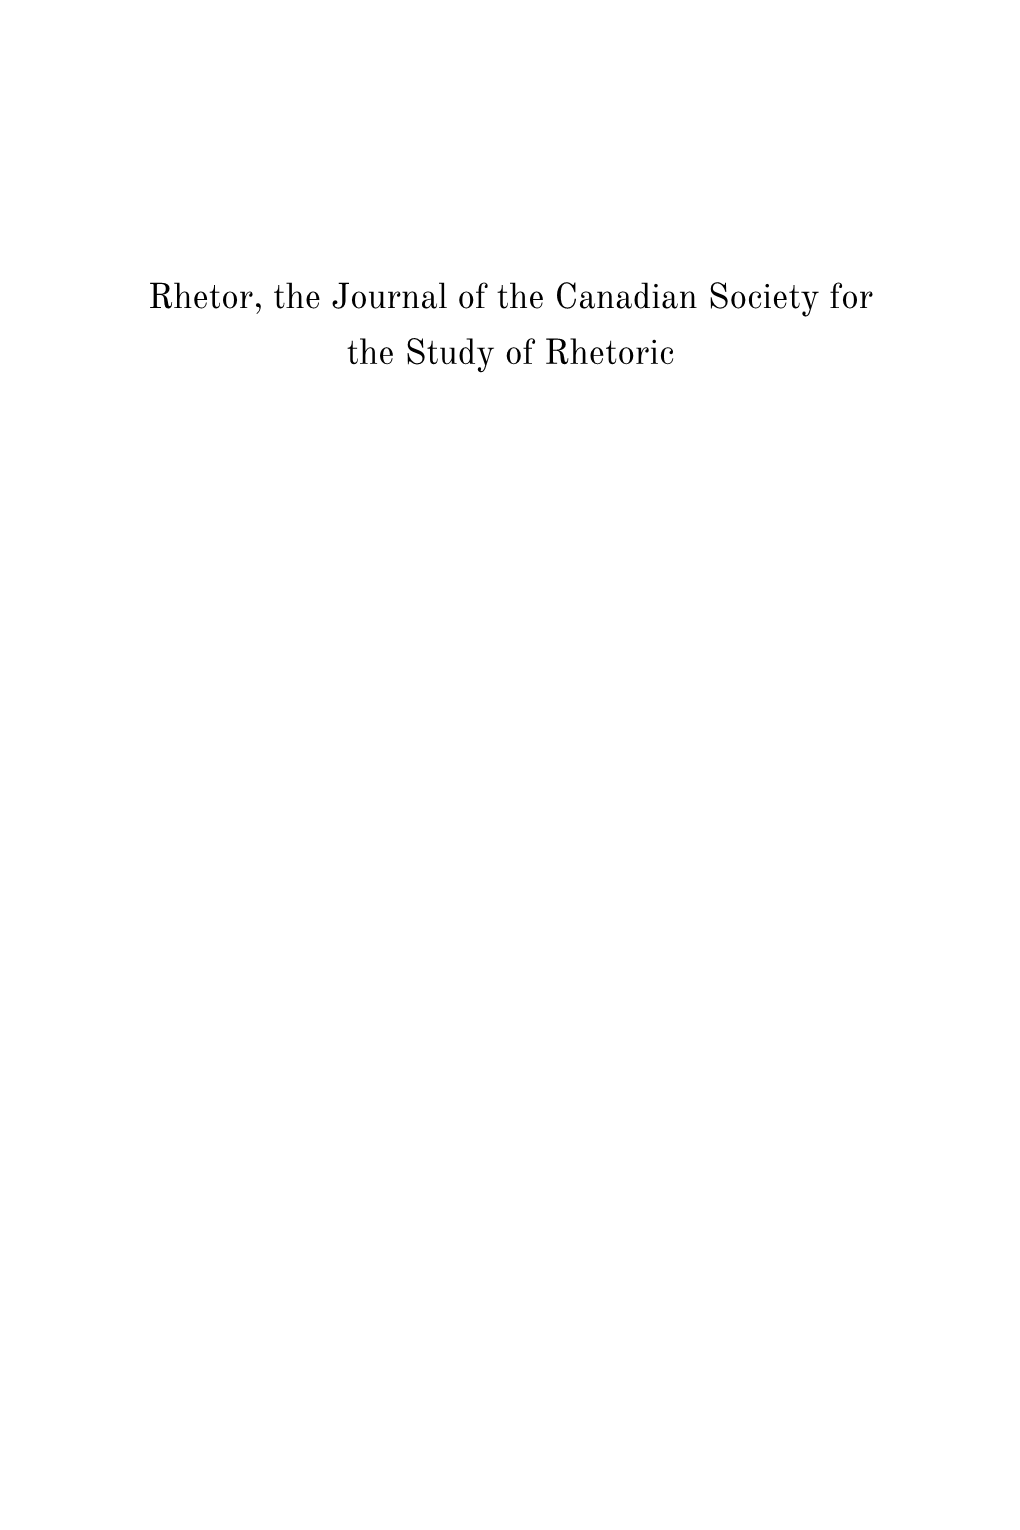 Rhetor, the Journal of the Canadian Society for the Study of Rhetoric